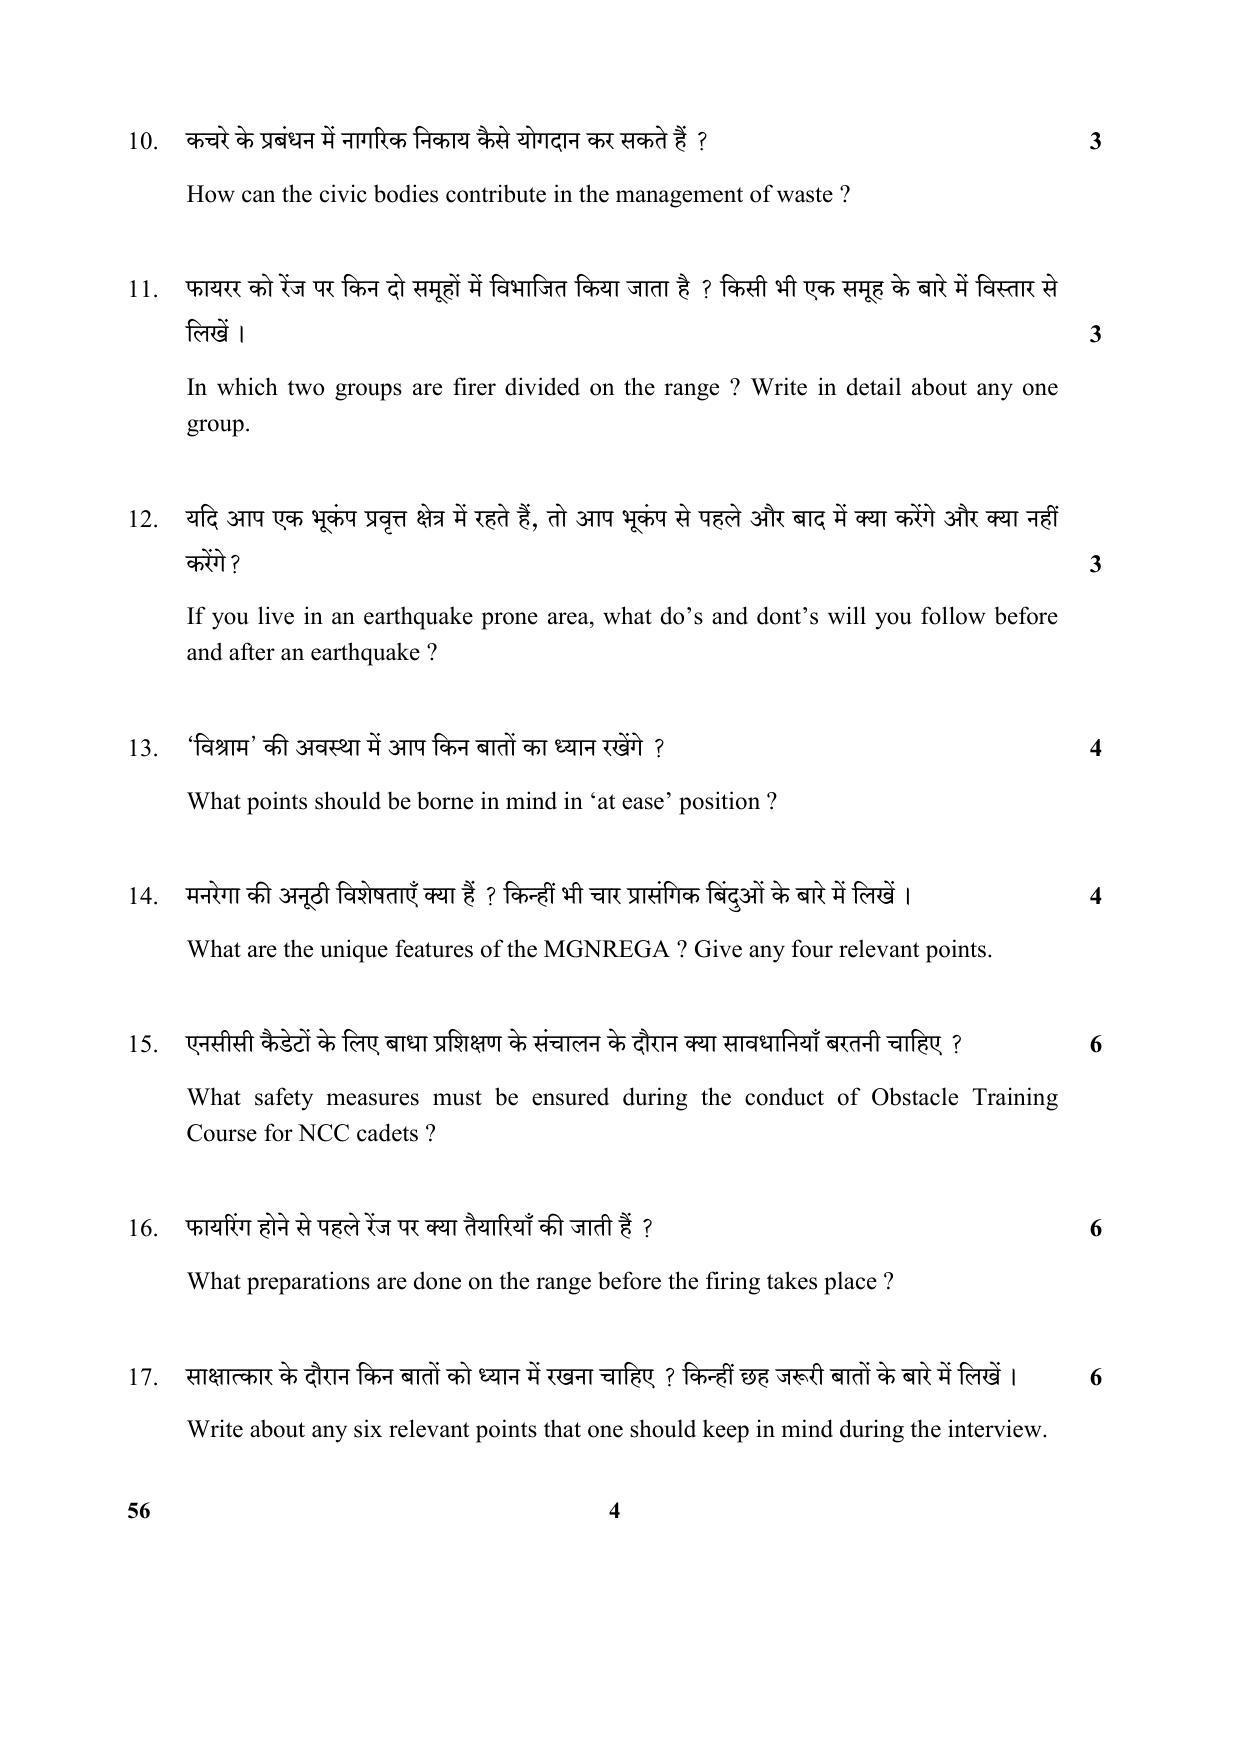 CBSE Class 10 56 (NCC) 2018 Question Paper - Page 4